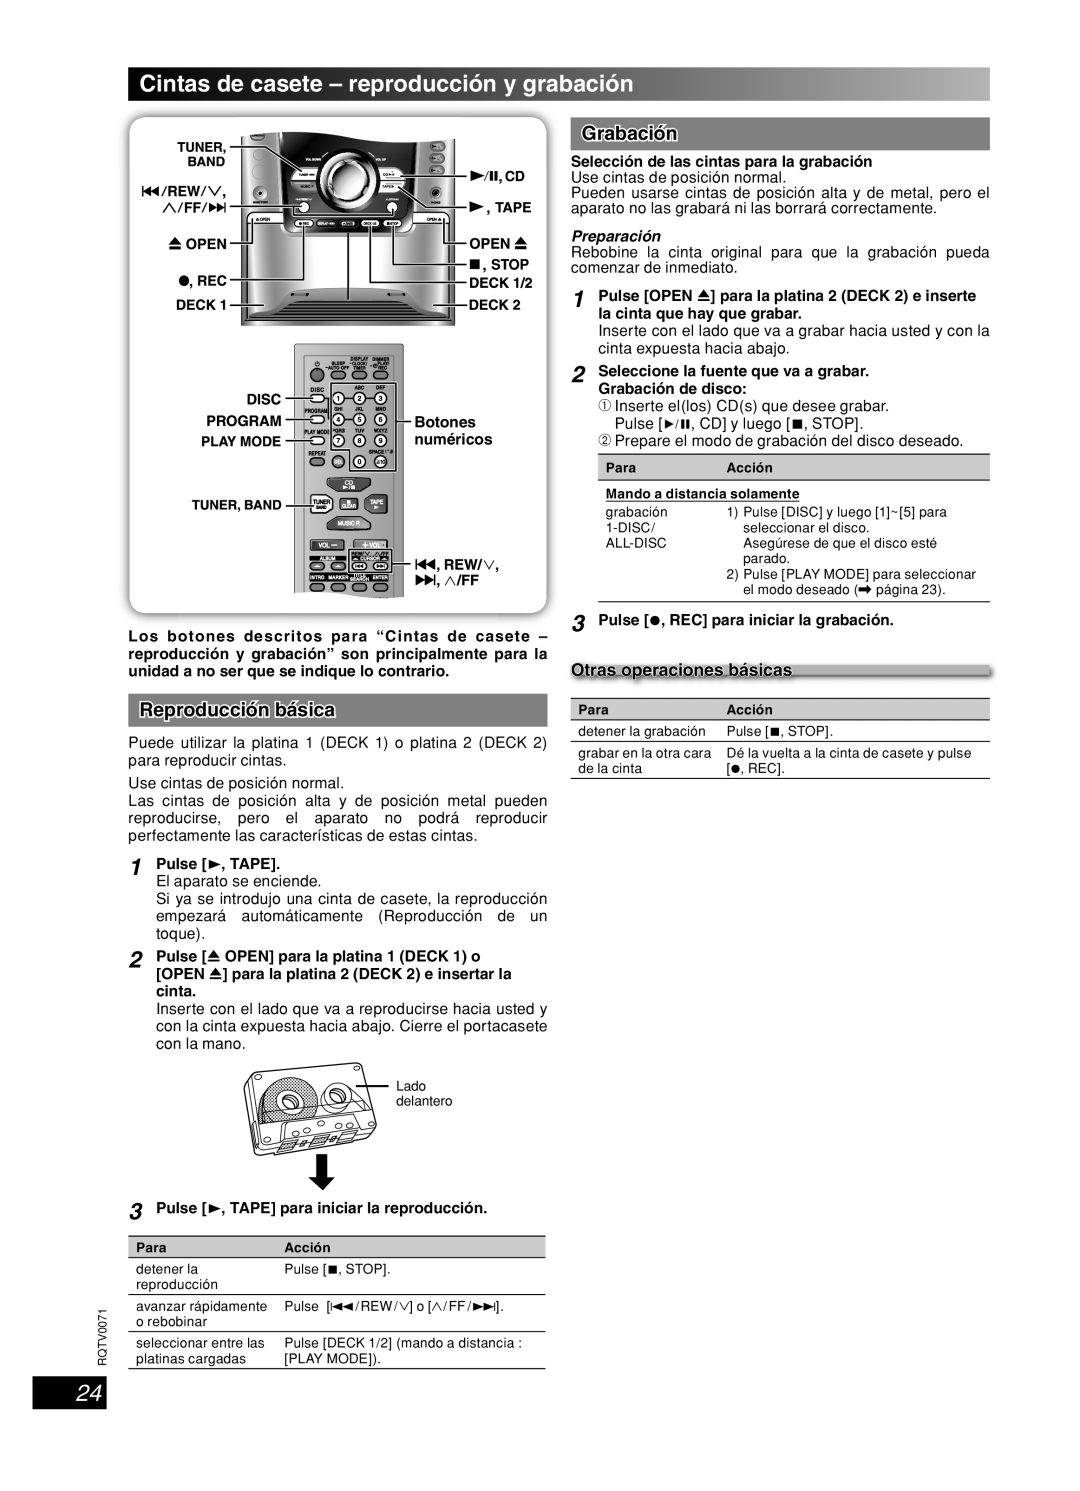 Panasonic SC-AK640 Cintas de casete - reproducción y grabación, Français, English Dansk, Lang - Español, Botones 